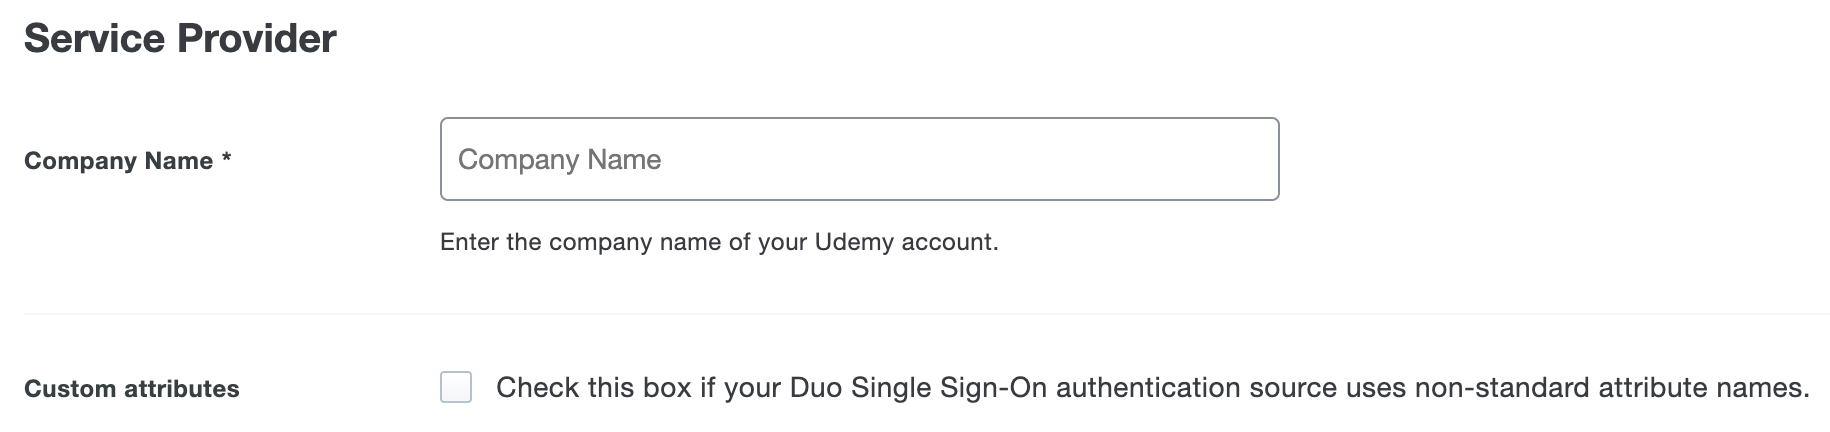 Duo Udemy Custom Attributes Checkbox